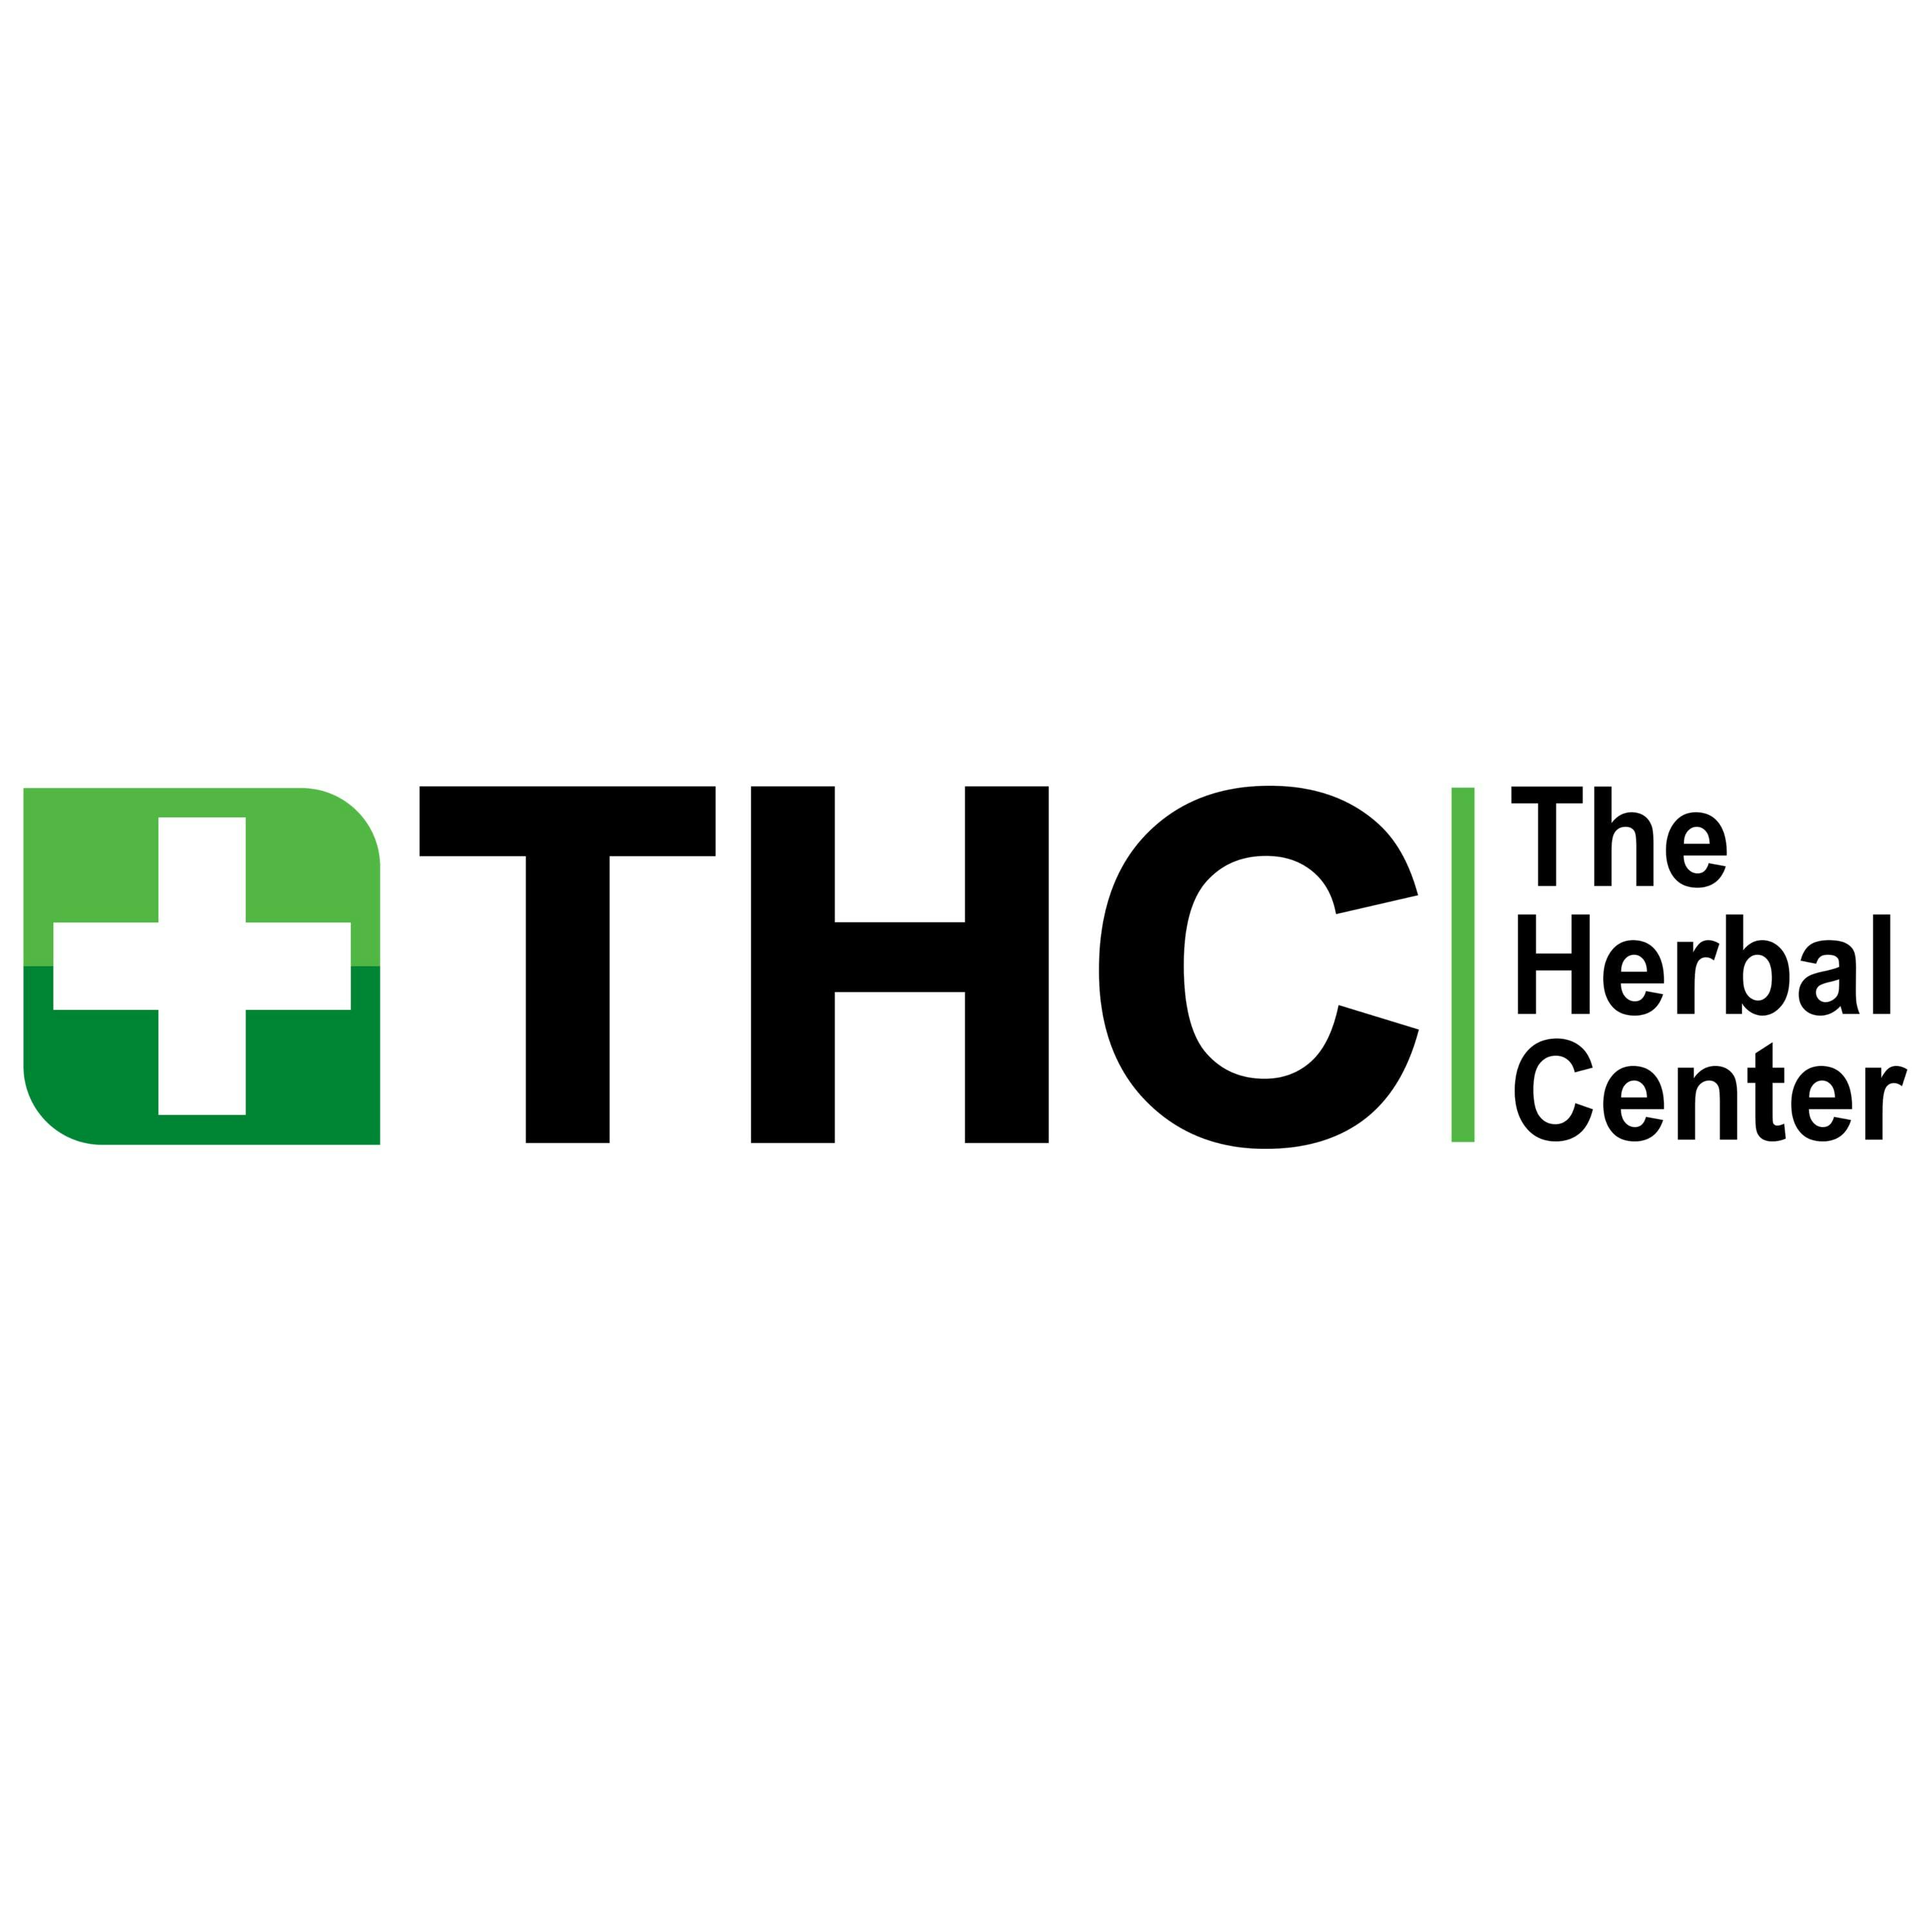 The Herbal Center